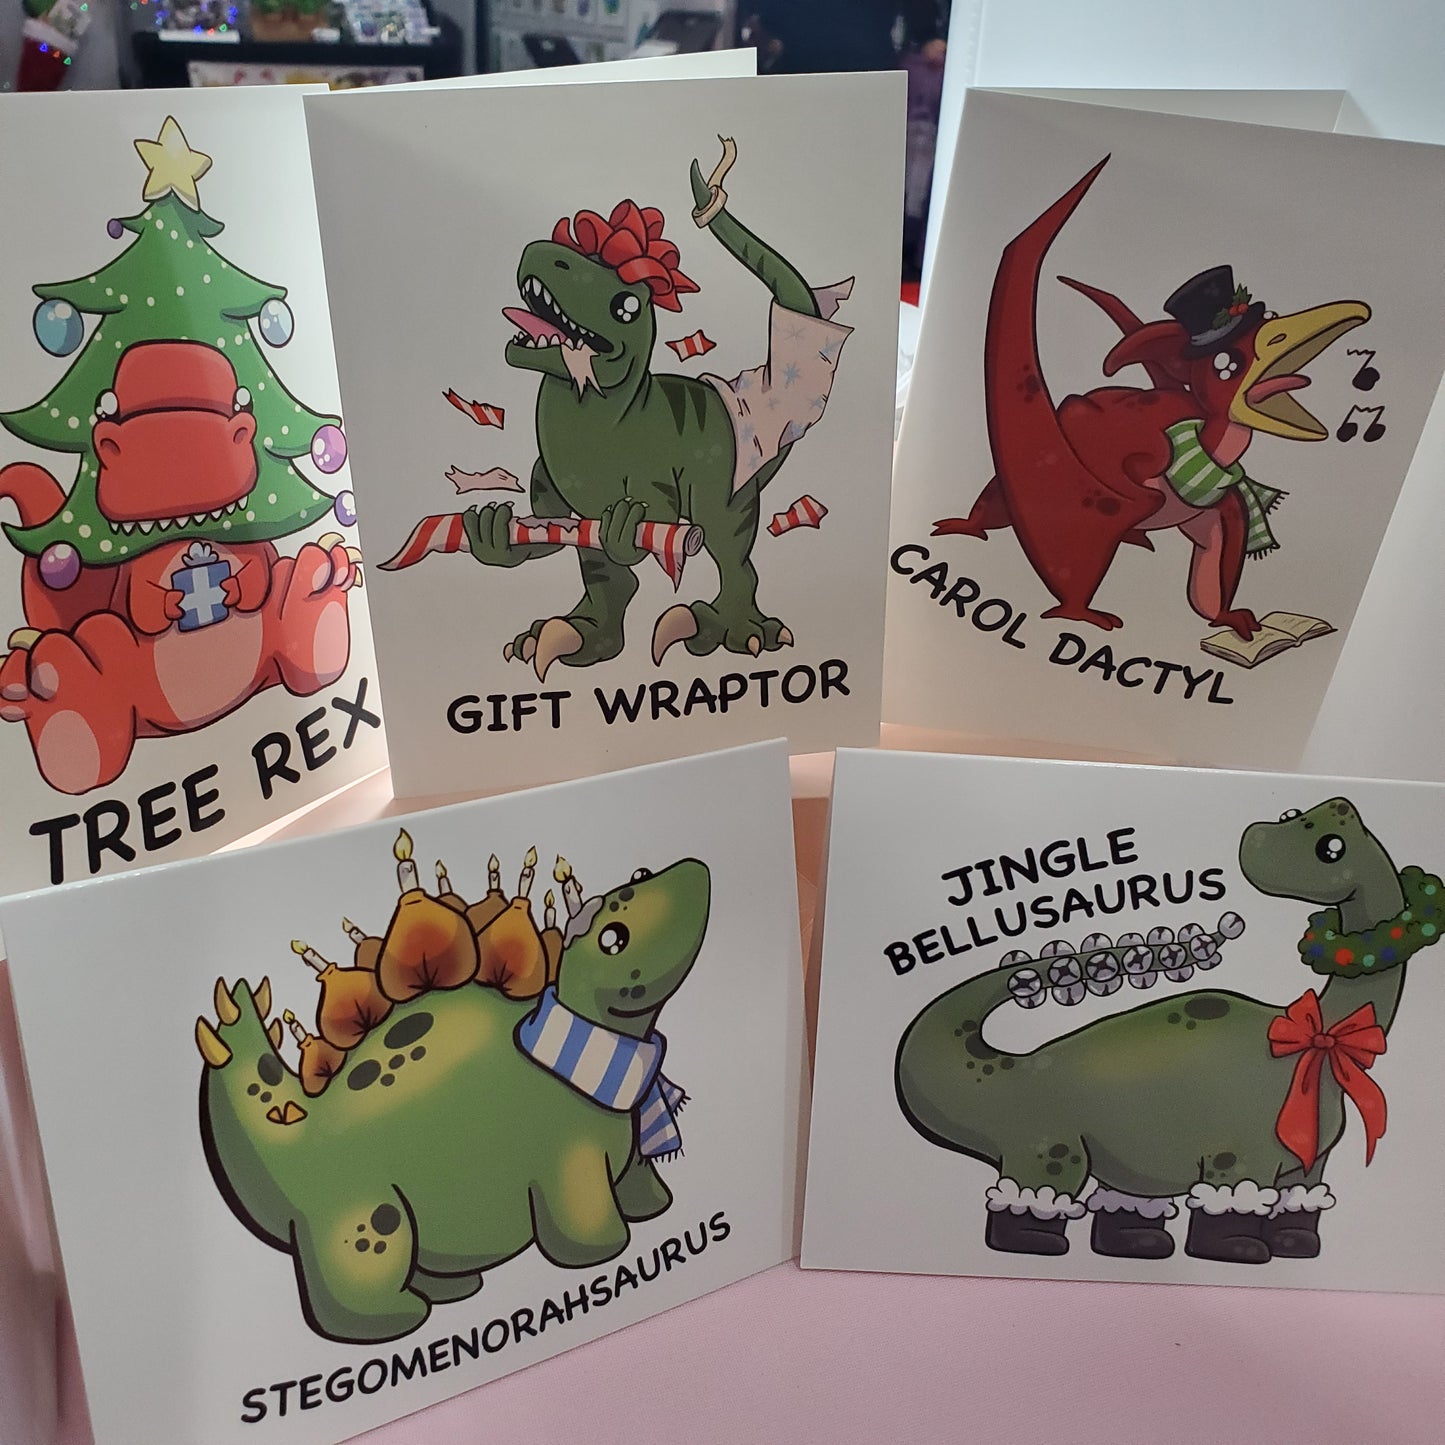 Jingle Bellusaurus Holiday Card